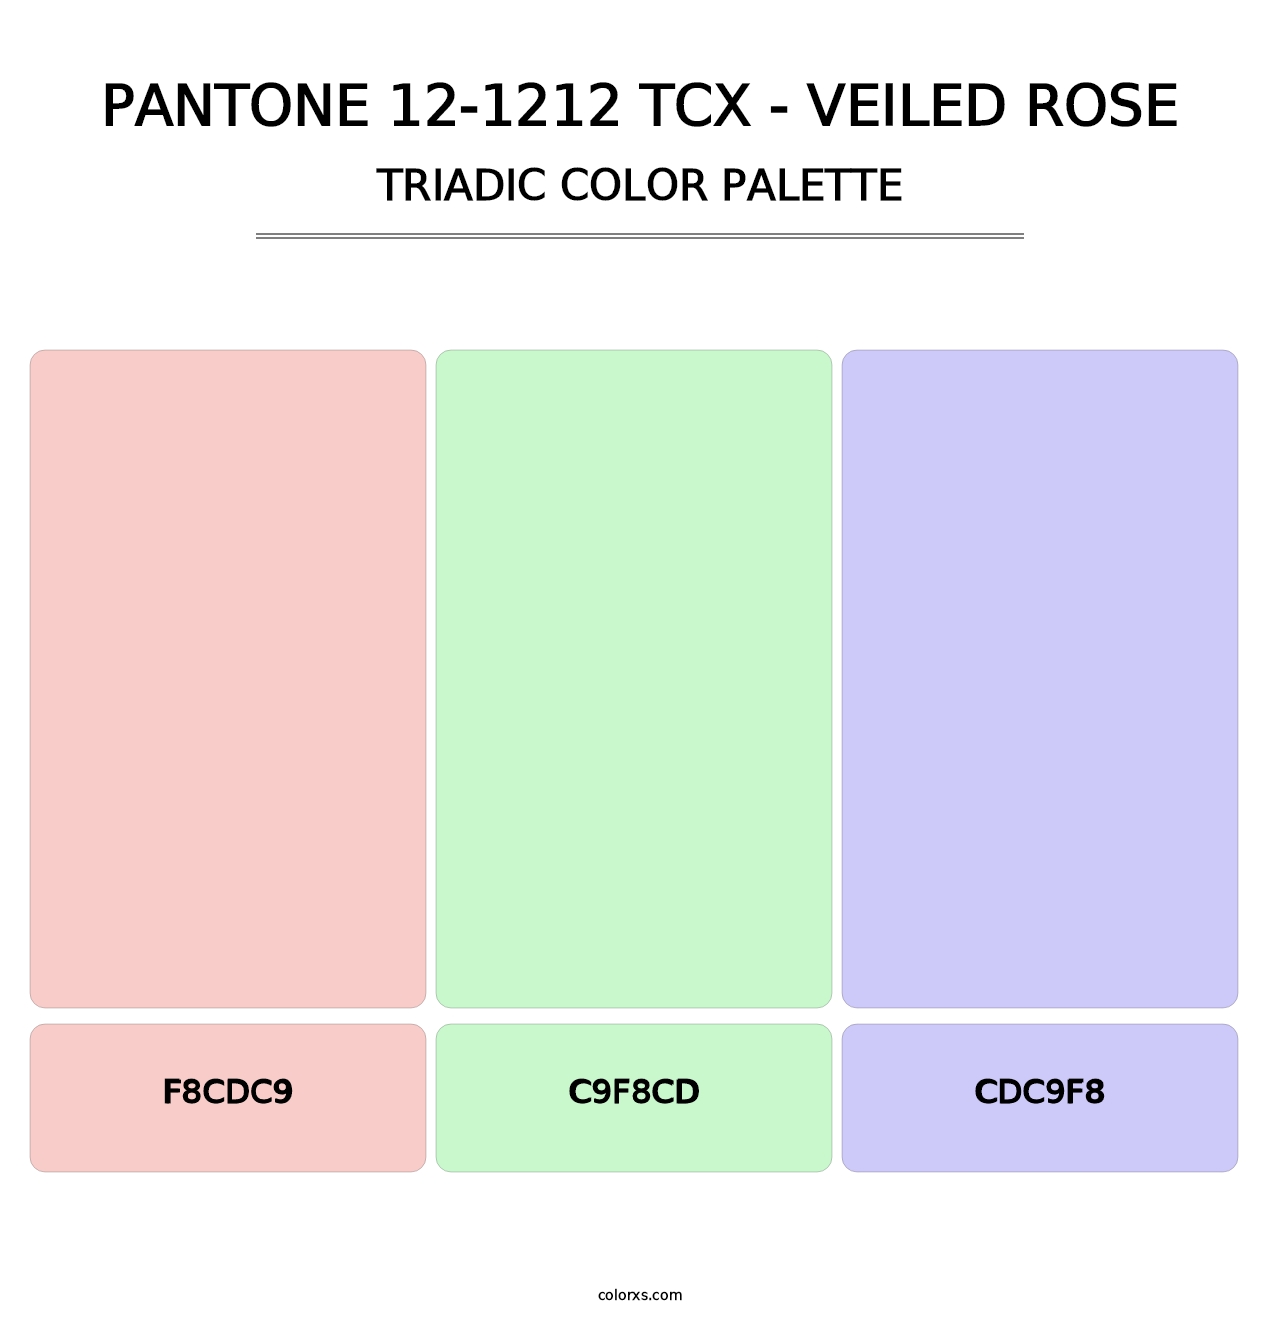 PANTONE 12-1212 TCX - Veiled Rose - Triadic Color Palette